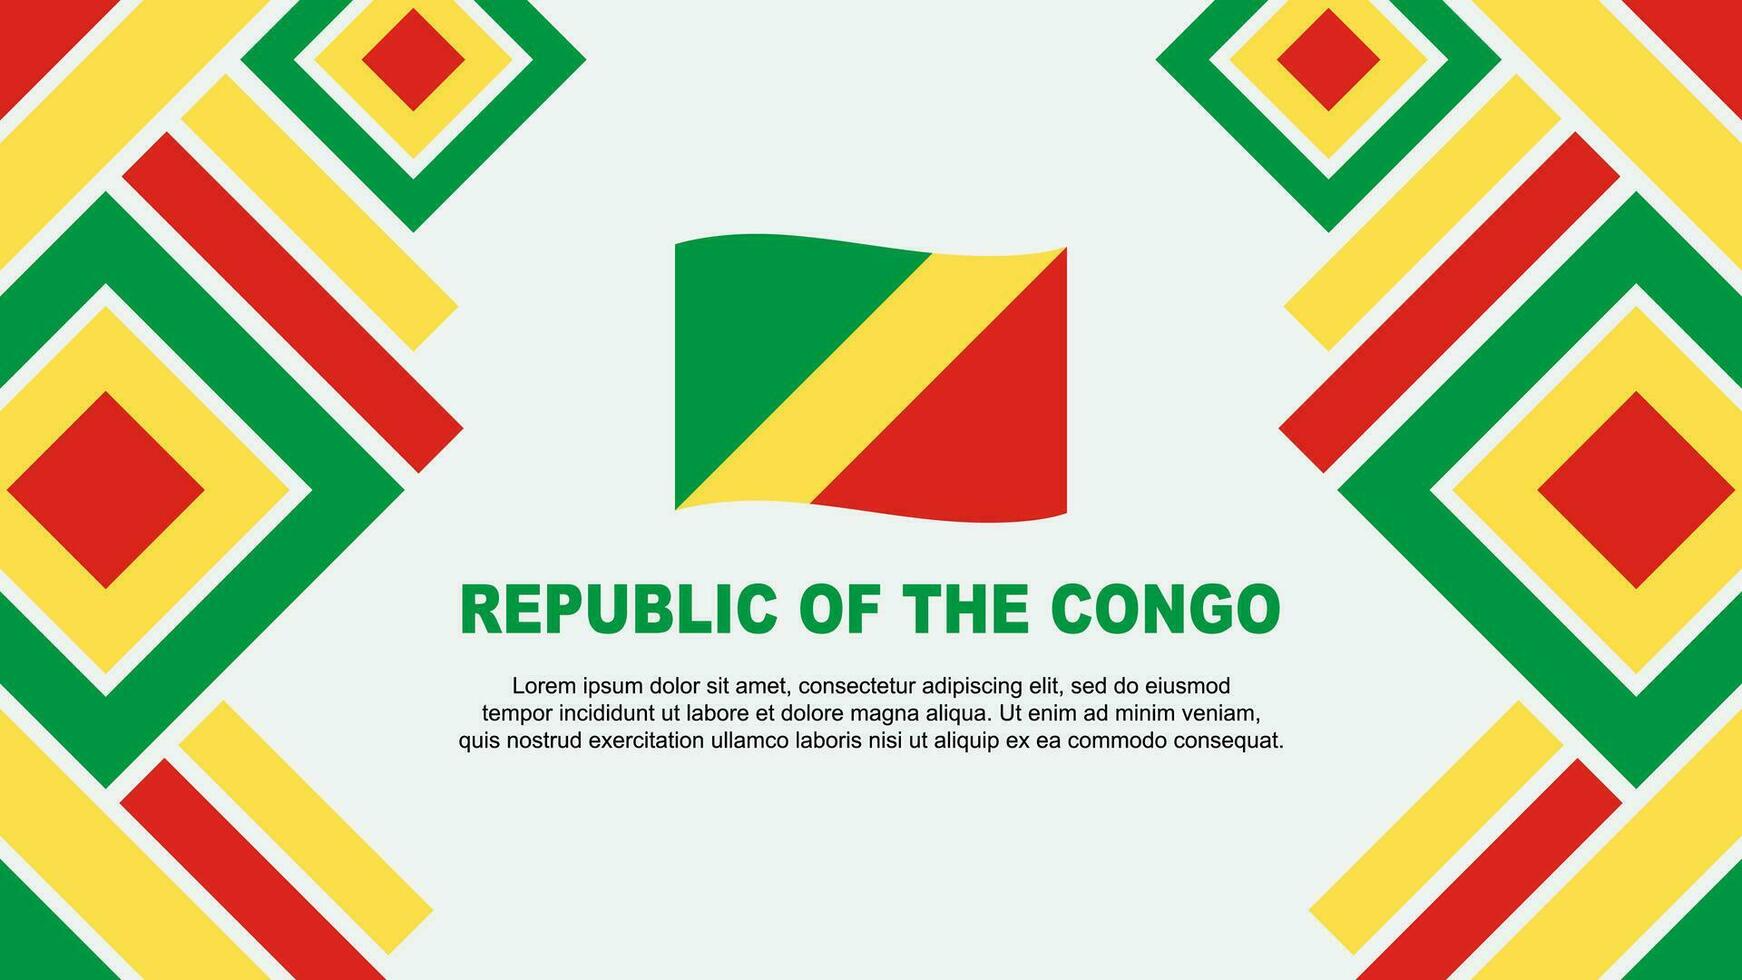 republiek van de Congo vlag abstract achtergrond ontwerp sjabloon. republiek van de Congo onafhankelijkheid dag banier behang vector illustratie. republiek van de Congo